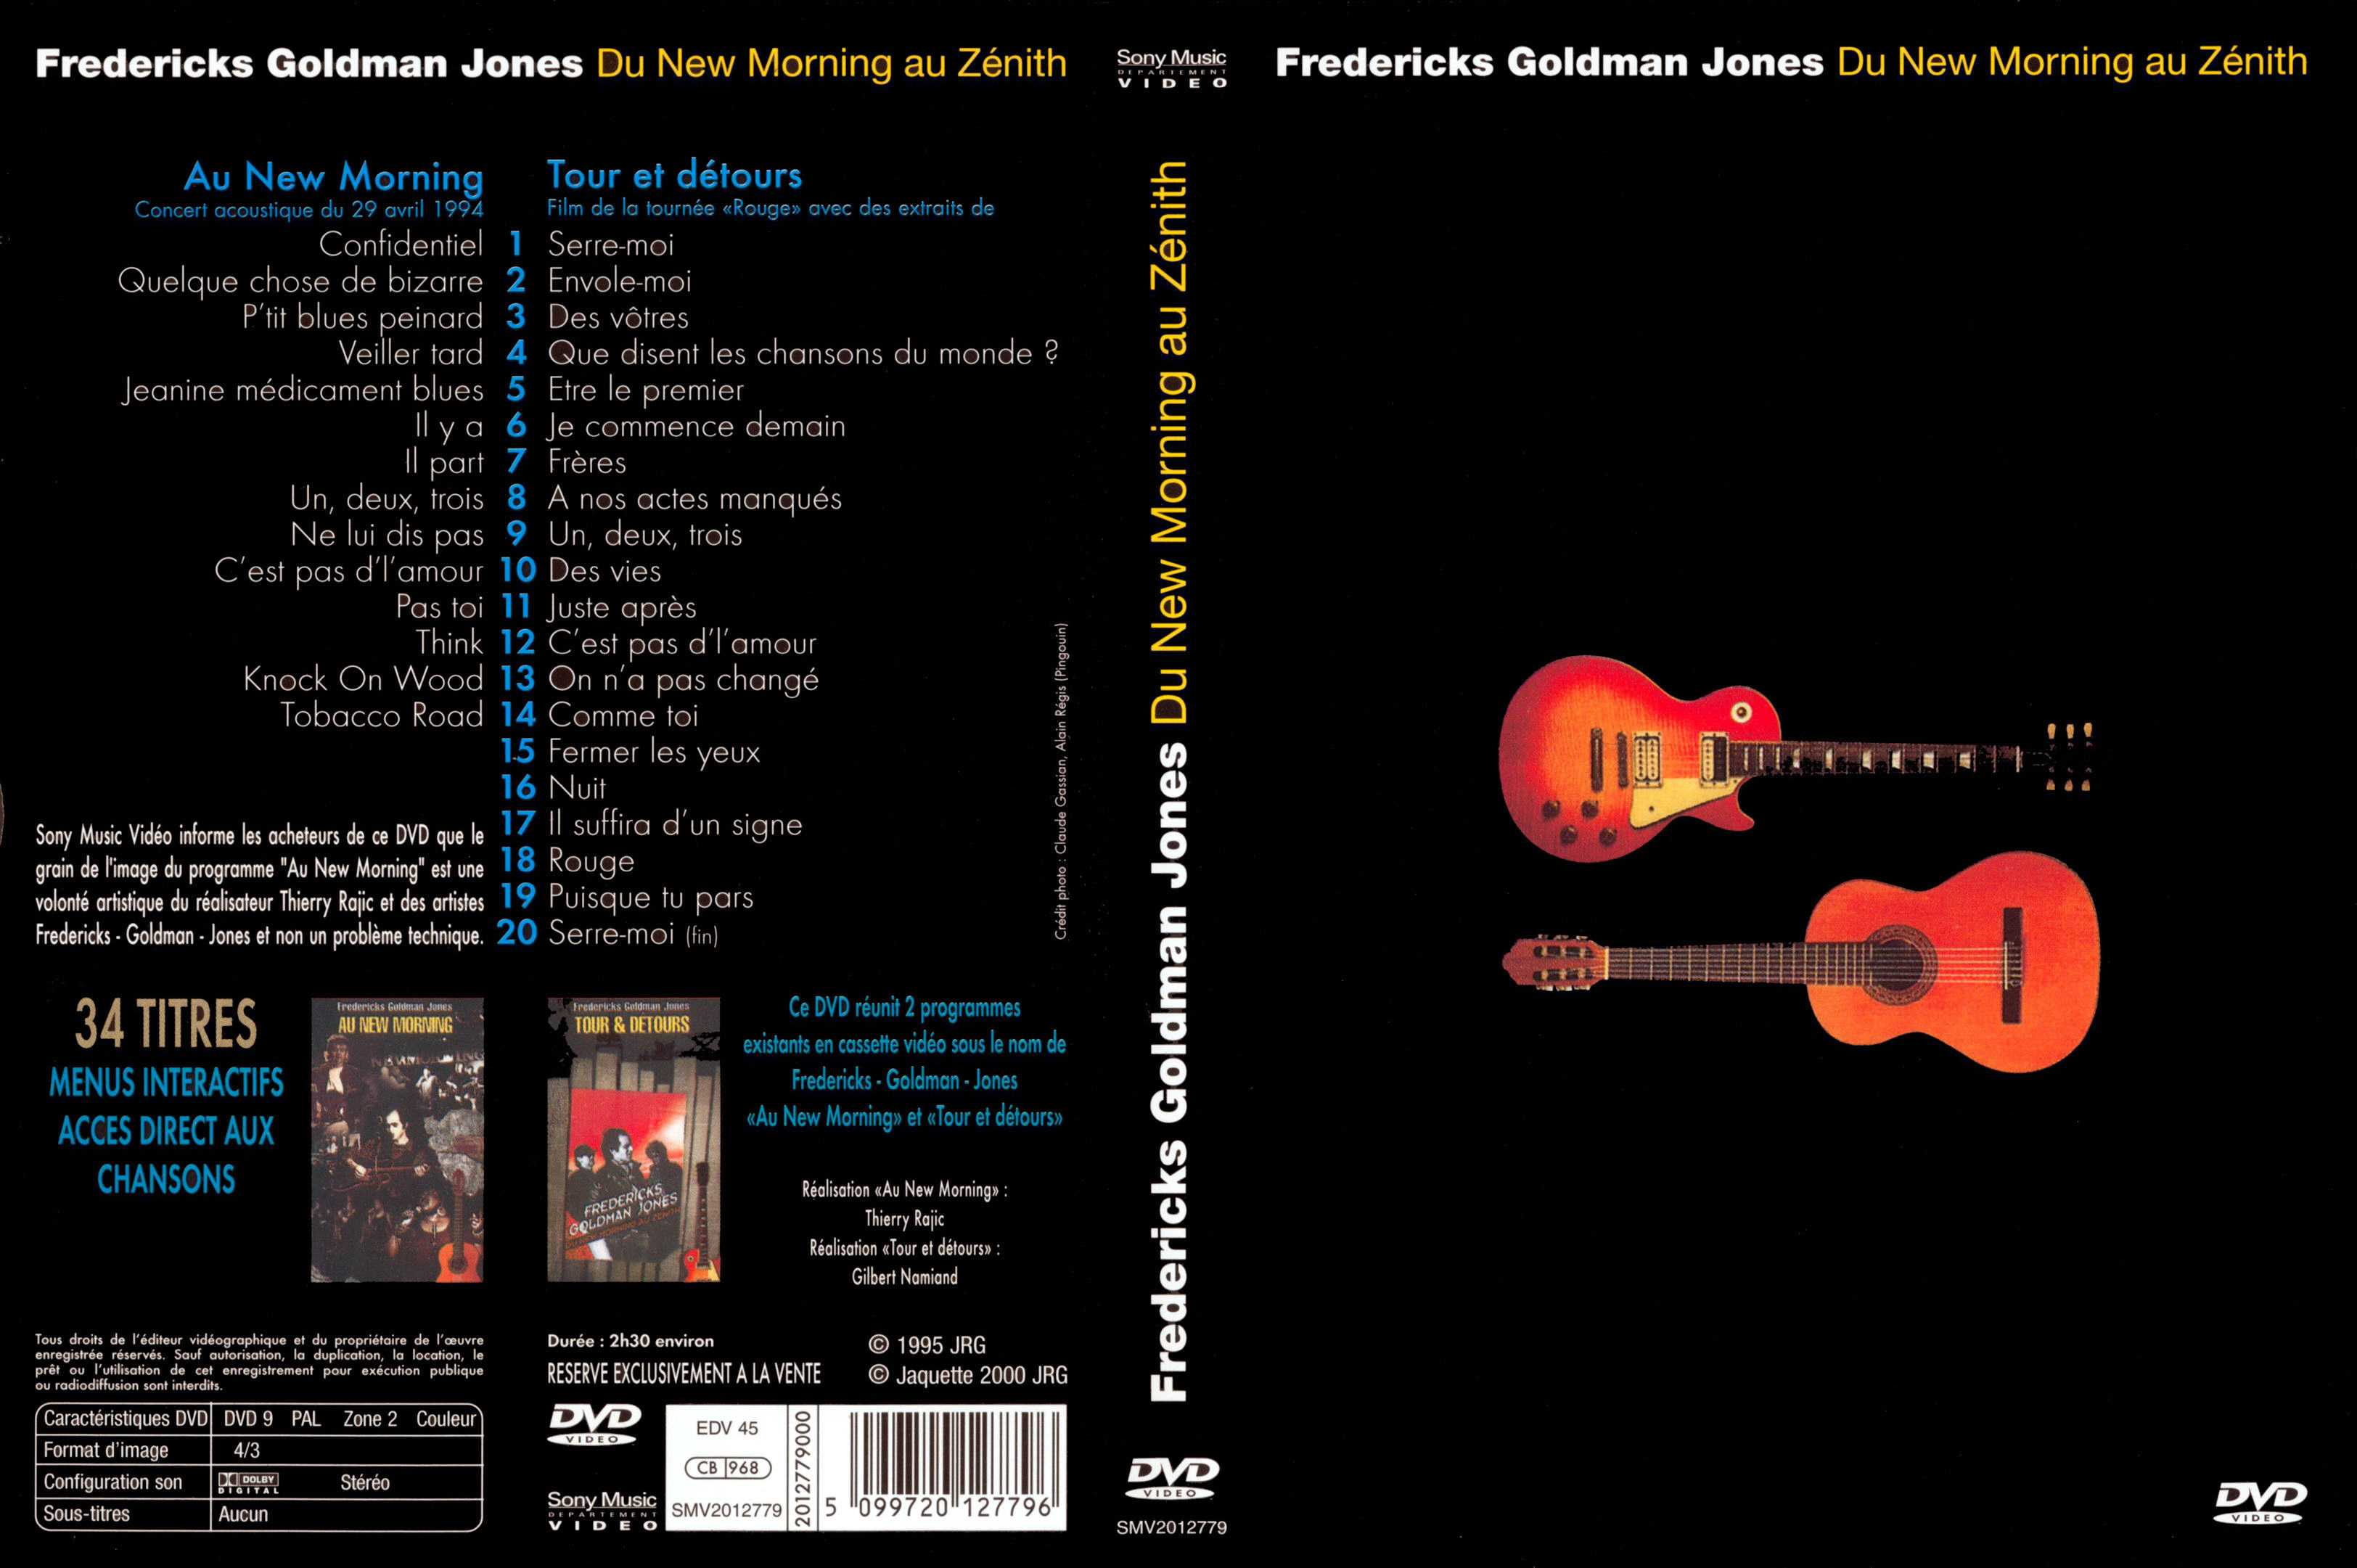 Jaquette DVD Fredericks Goldman Jones du new morning au zenith